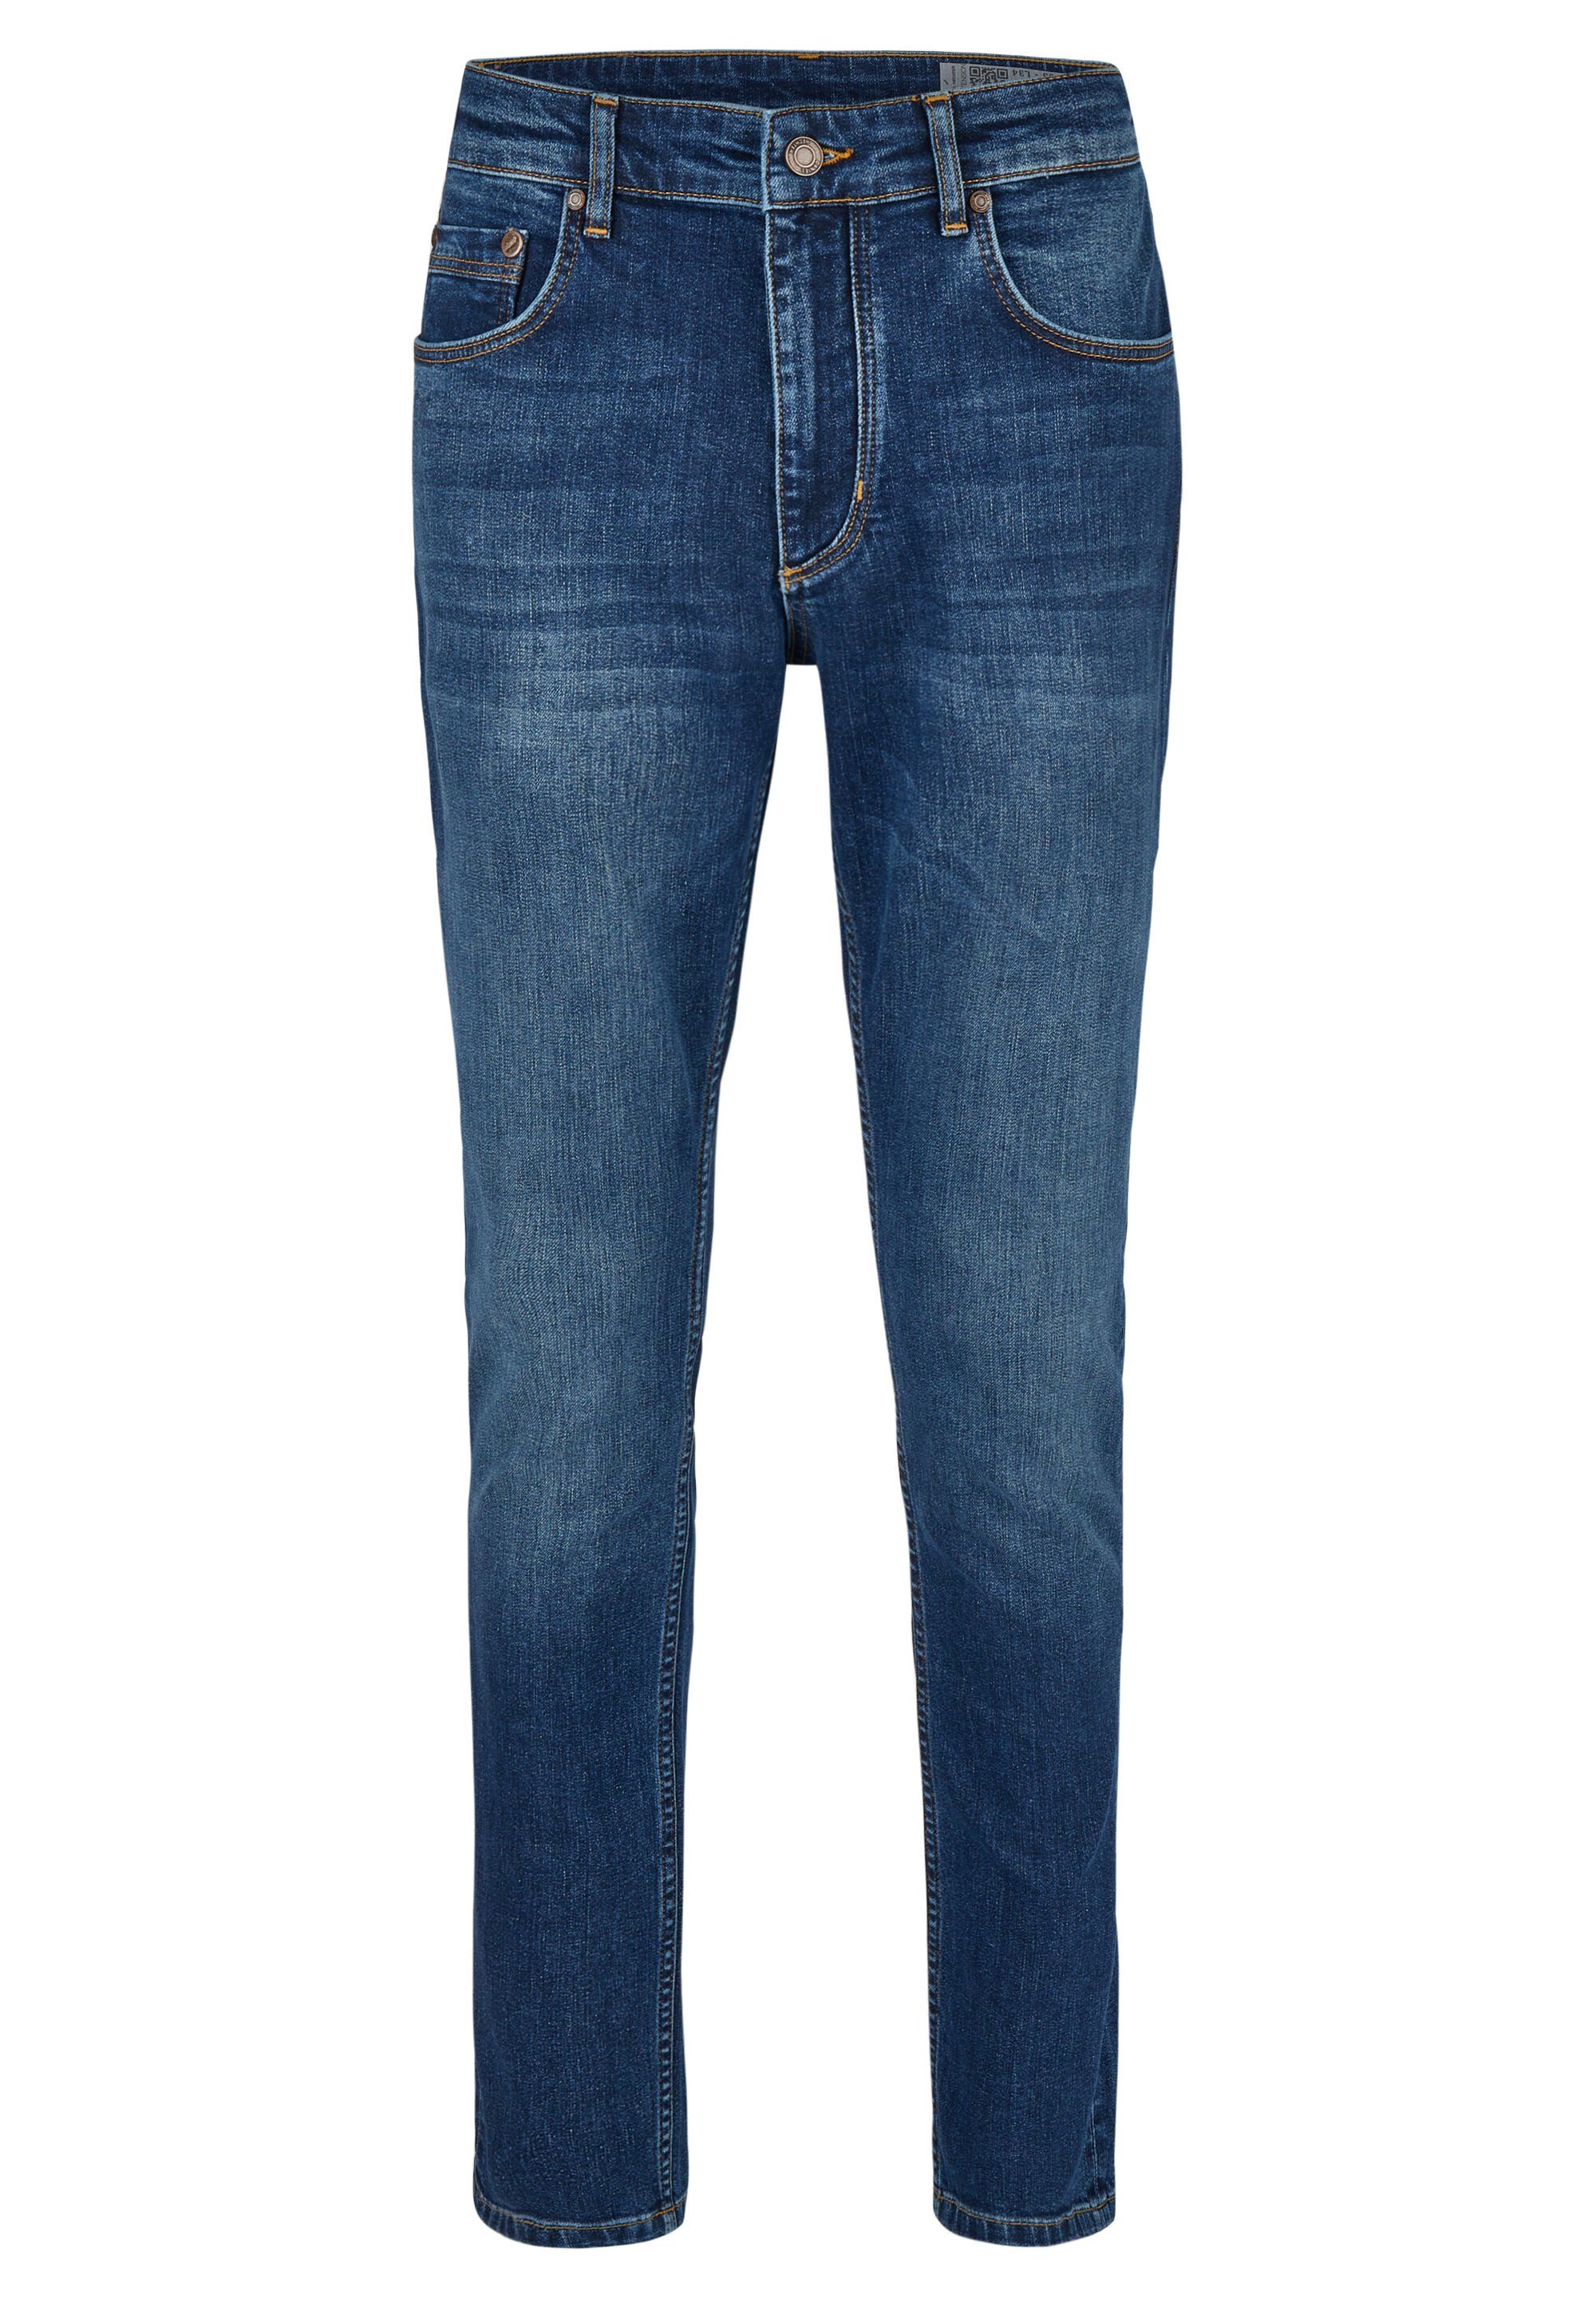 HECHTER PARIS 5-Pocket-Jeans Unimuster dark blue